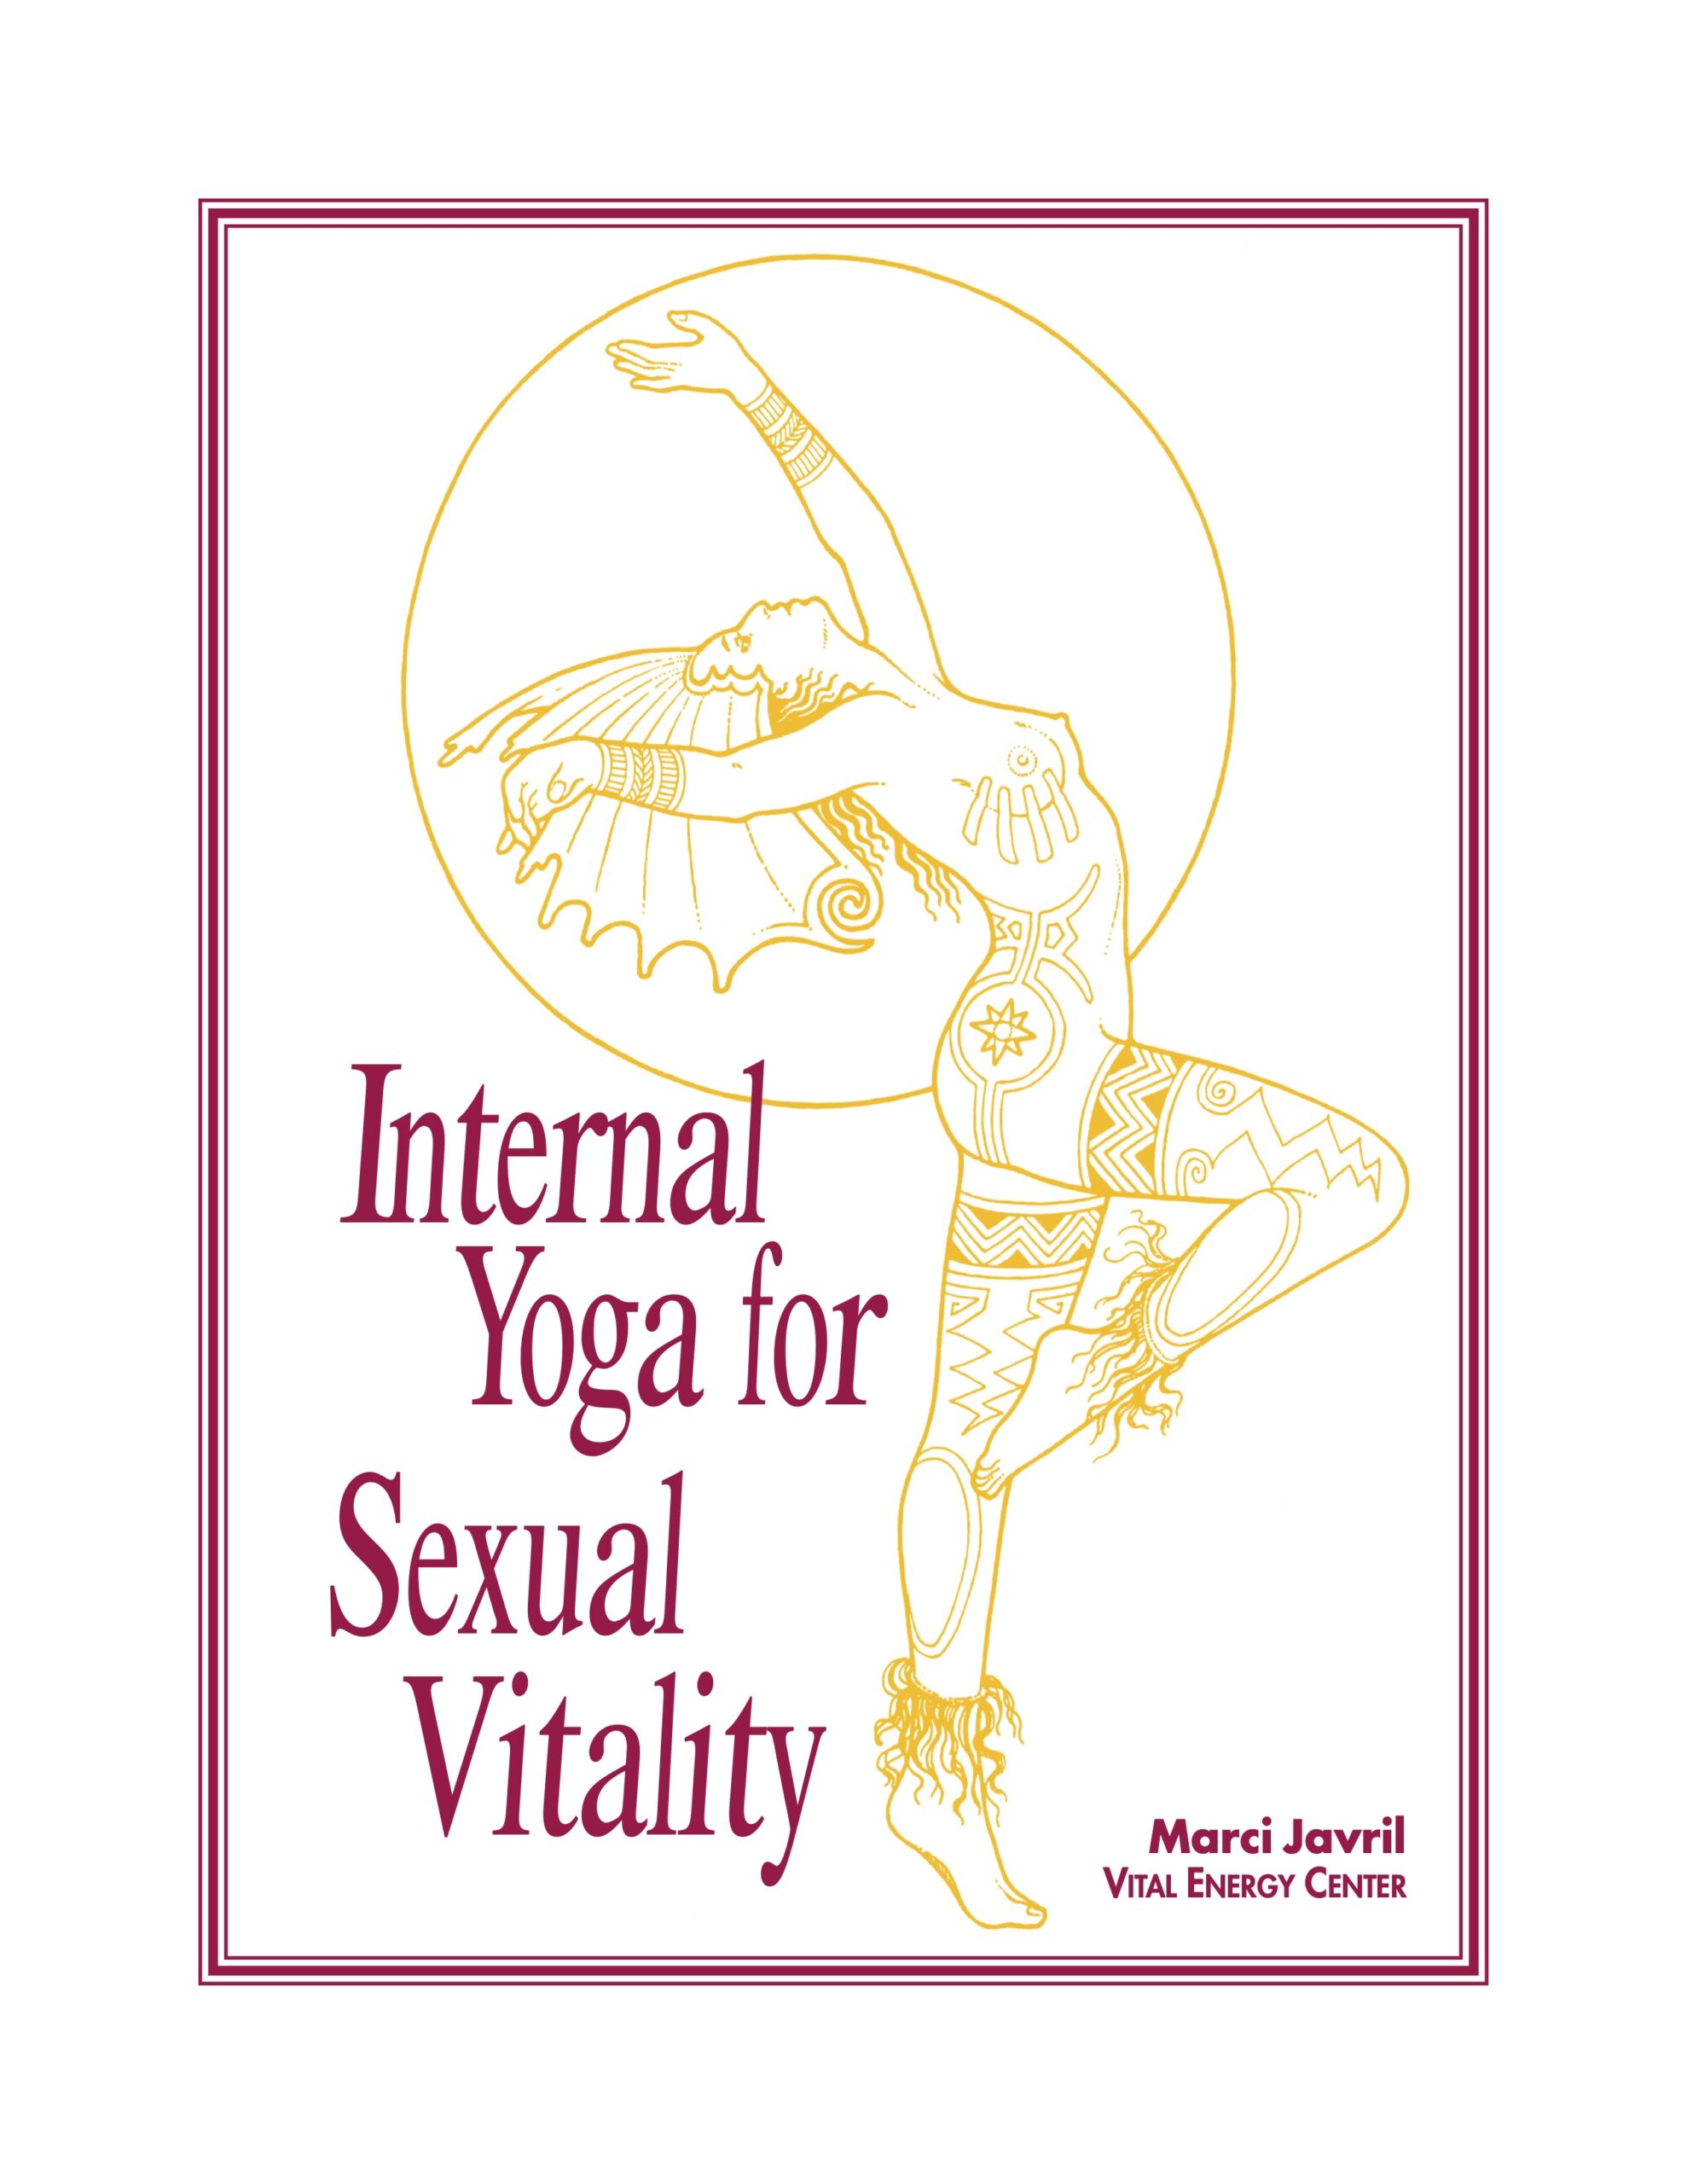 Internal Yoga for Sexual Vitality – Marci Javril: Massage, Breath